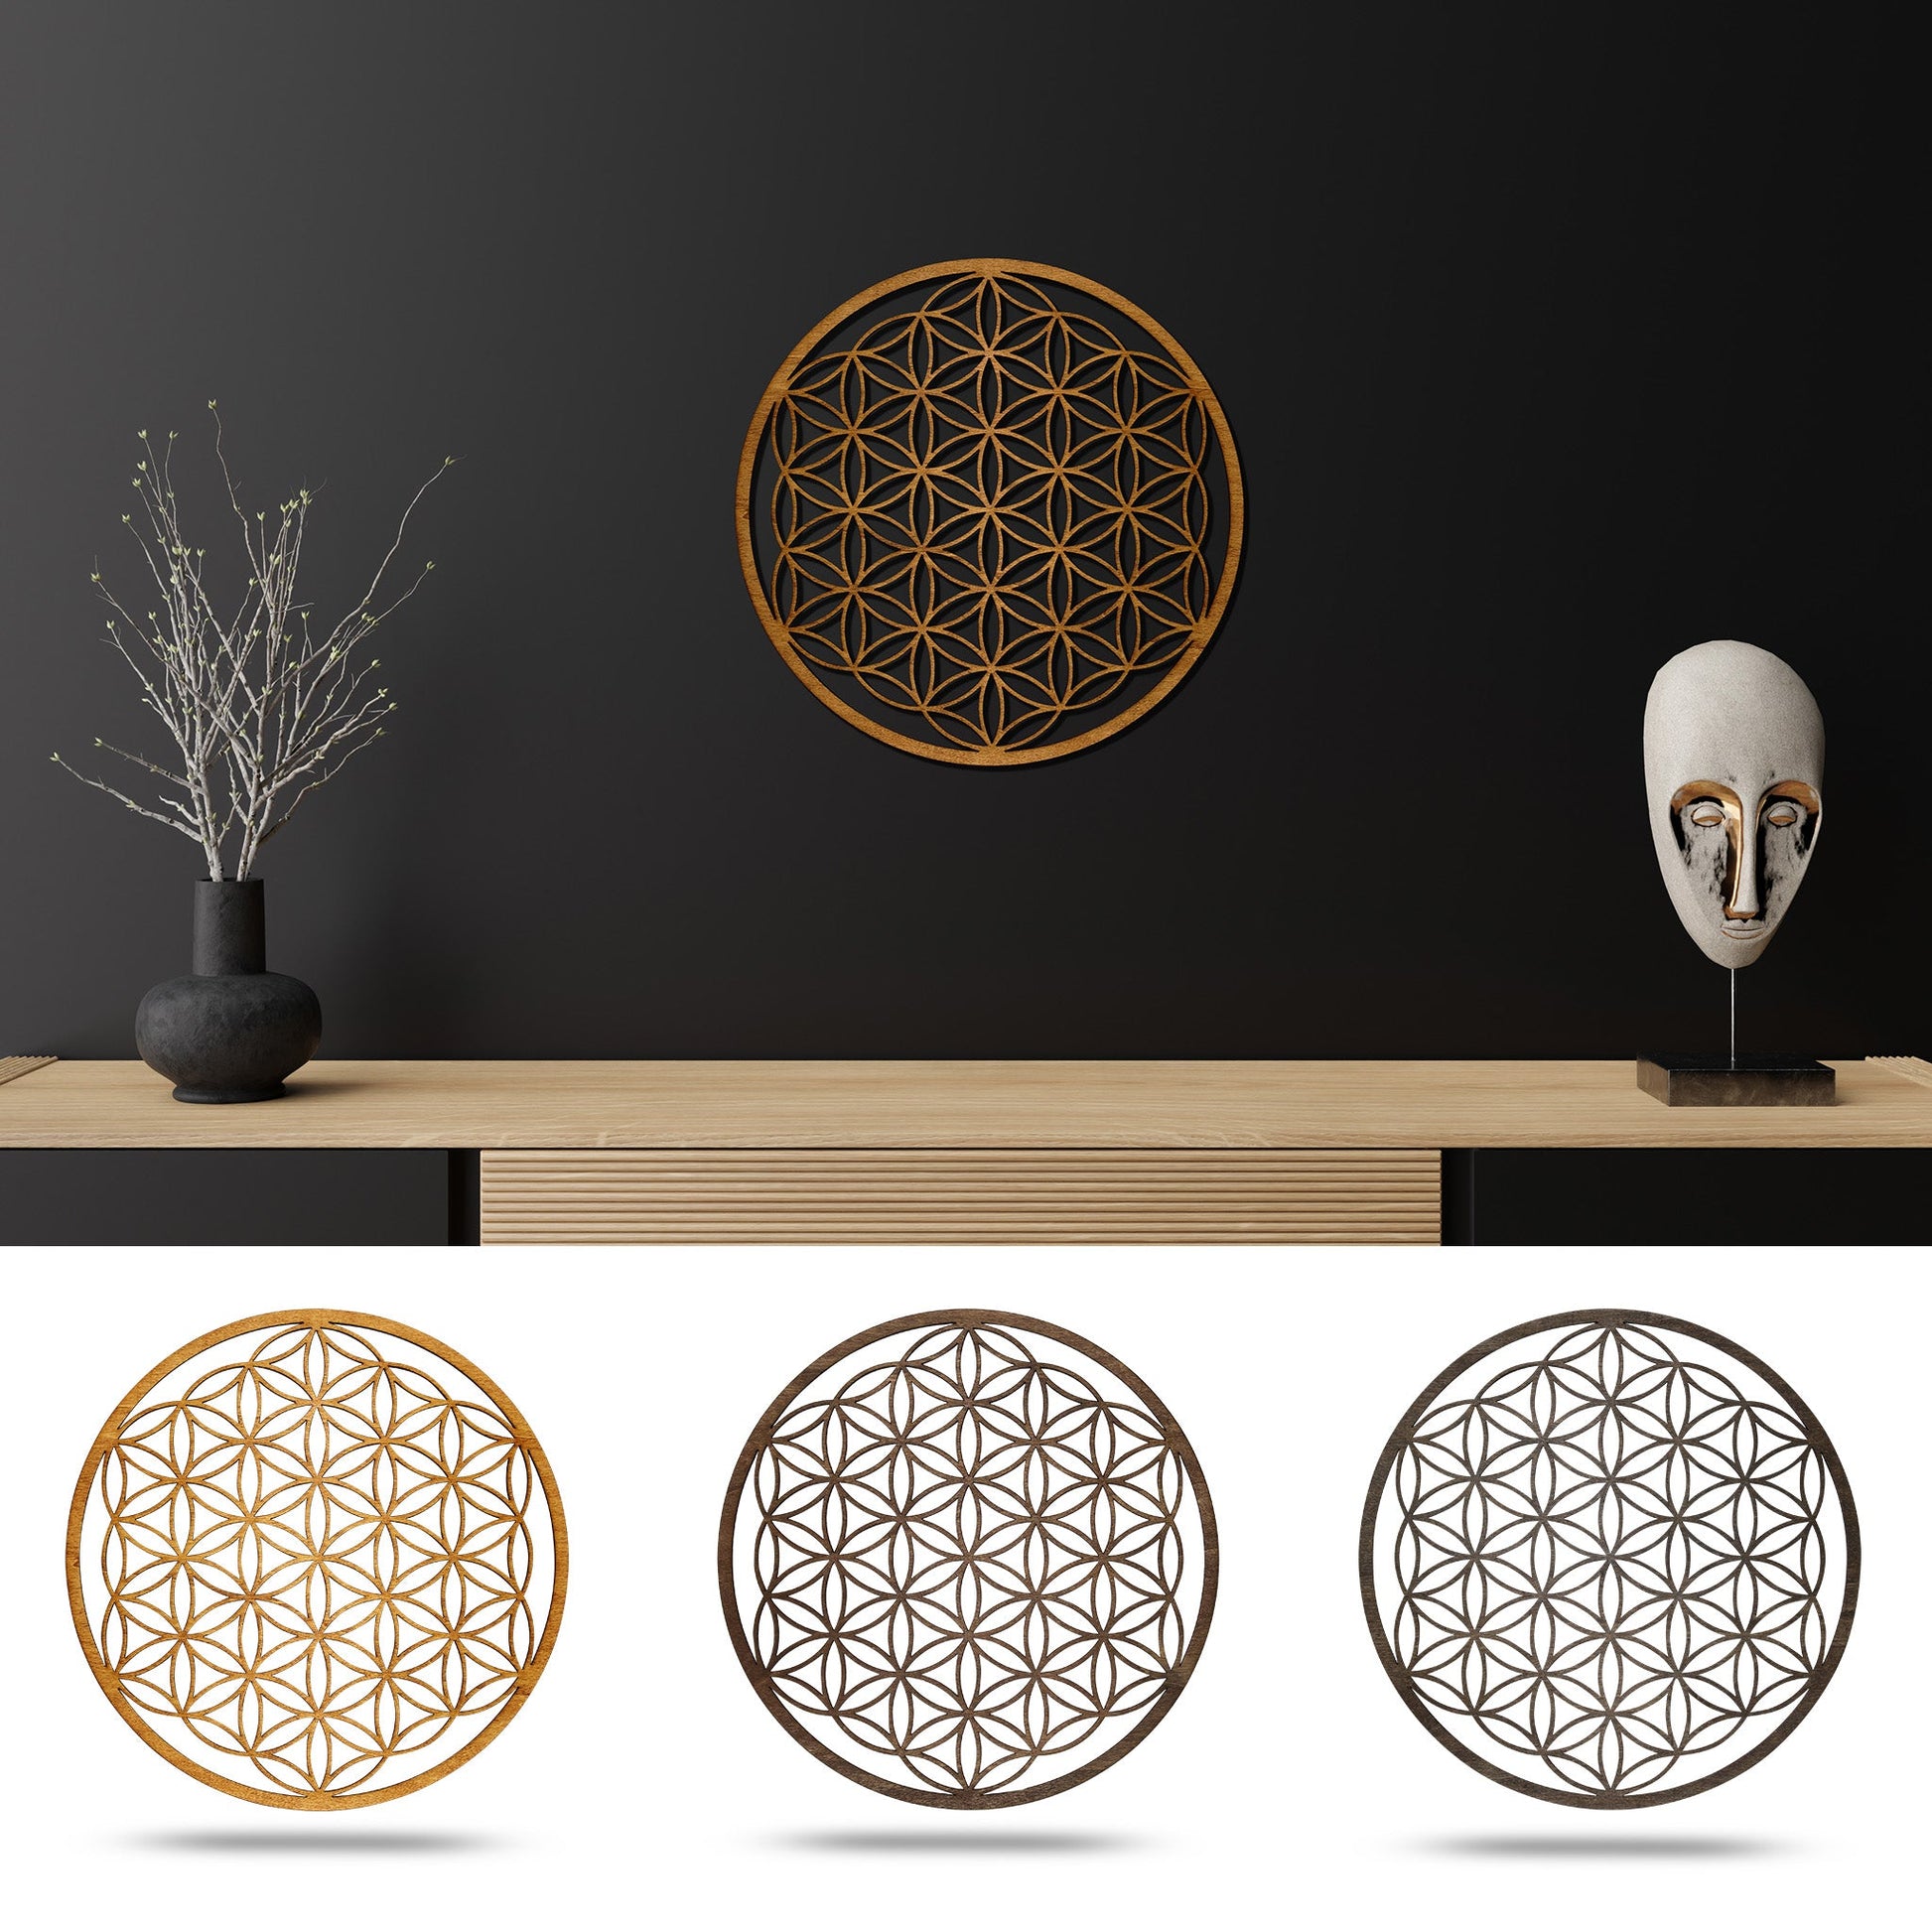 Wandbild Holz "Blume des Lebens" - Nanino Design Onlineshop -